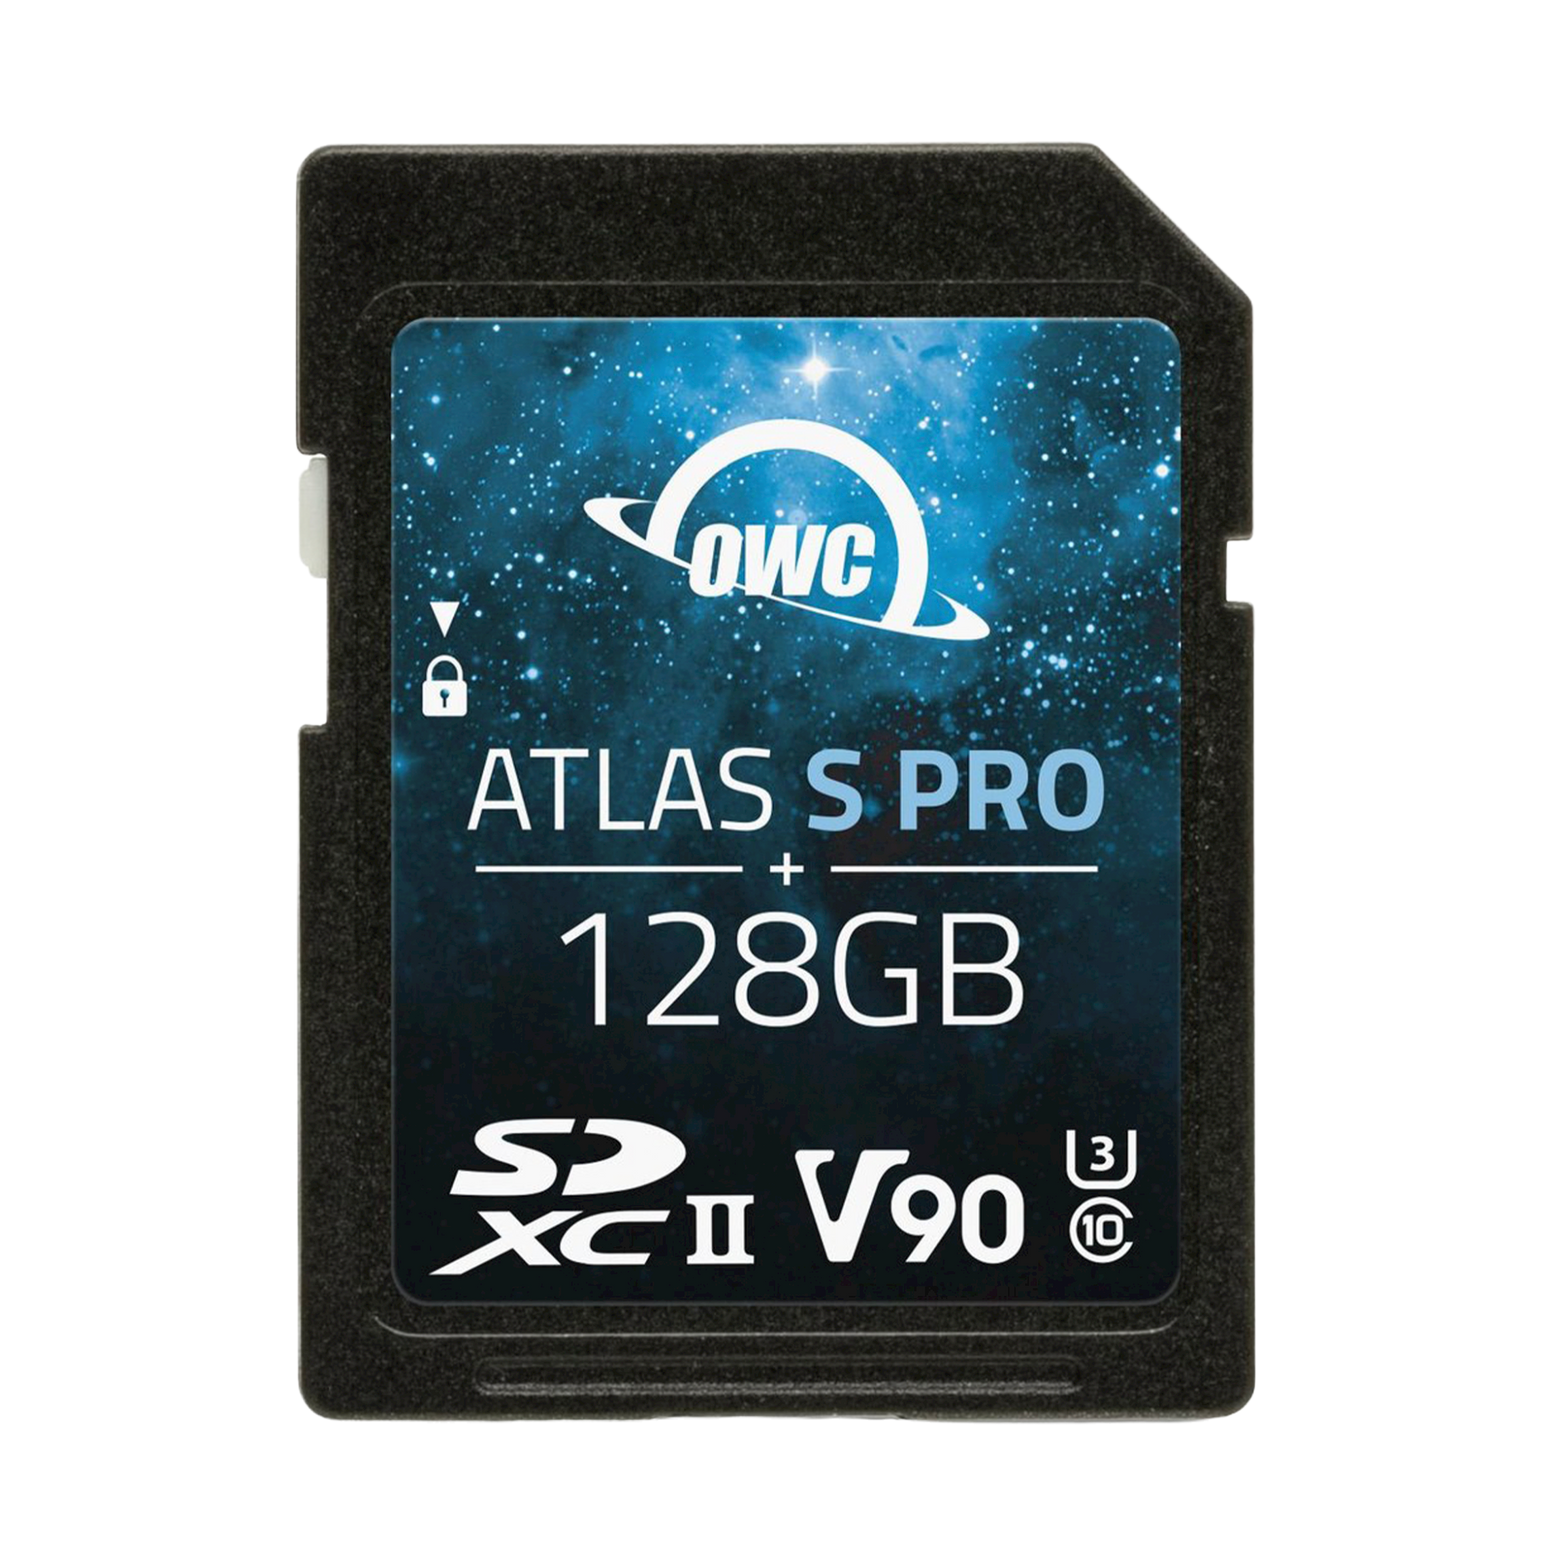 OWC 128GB Atlas S Pro SD V90 Memory Card - Discontinued